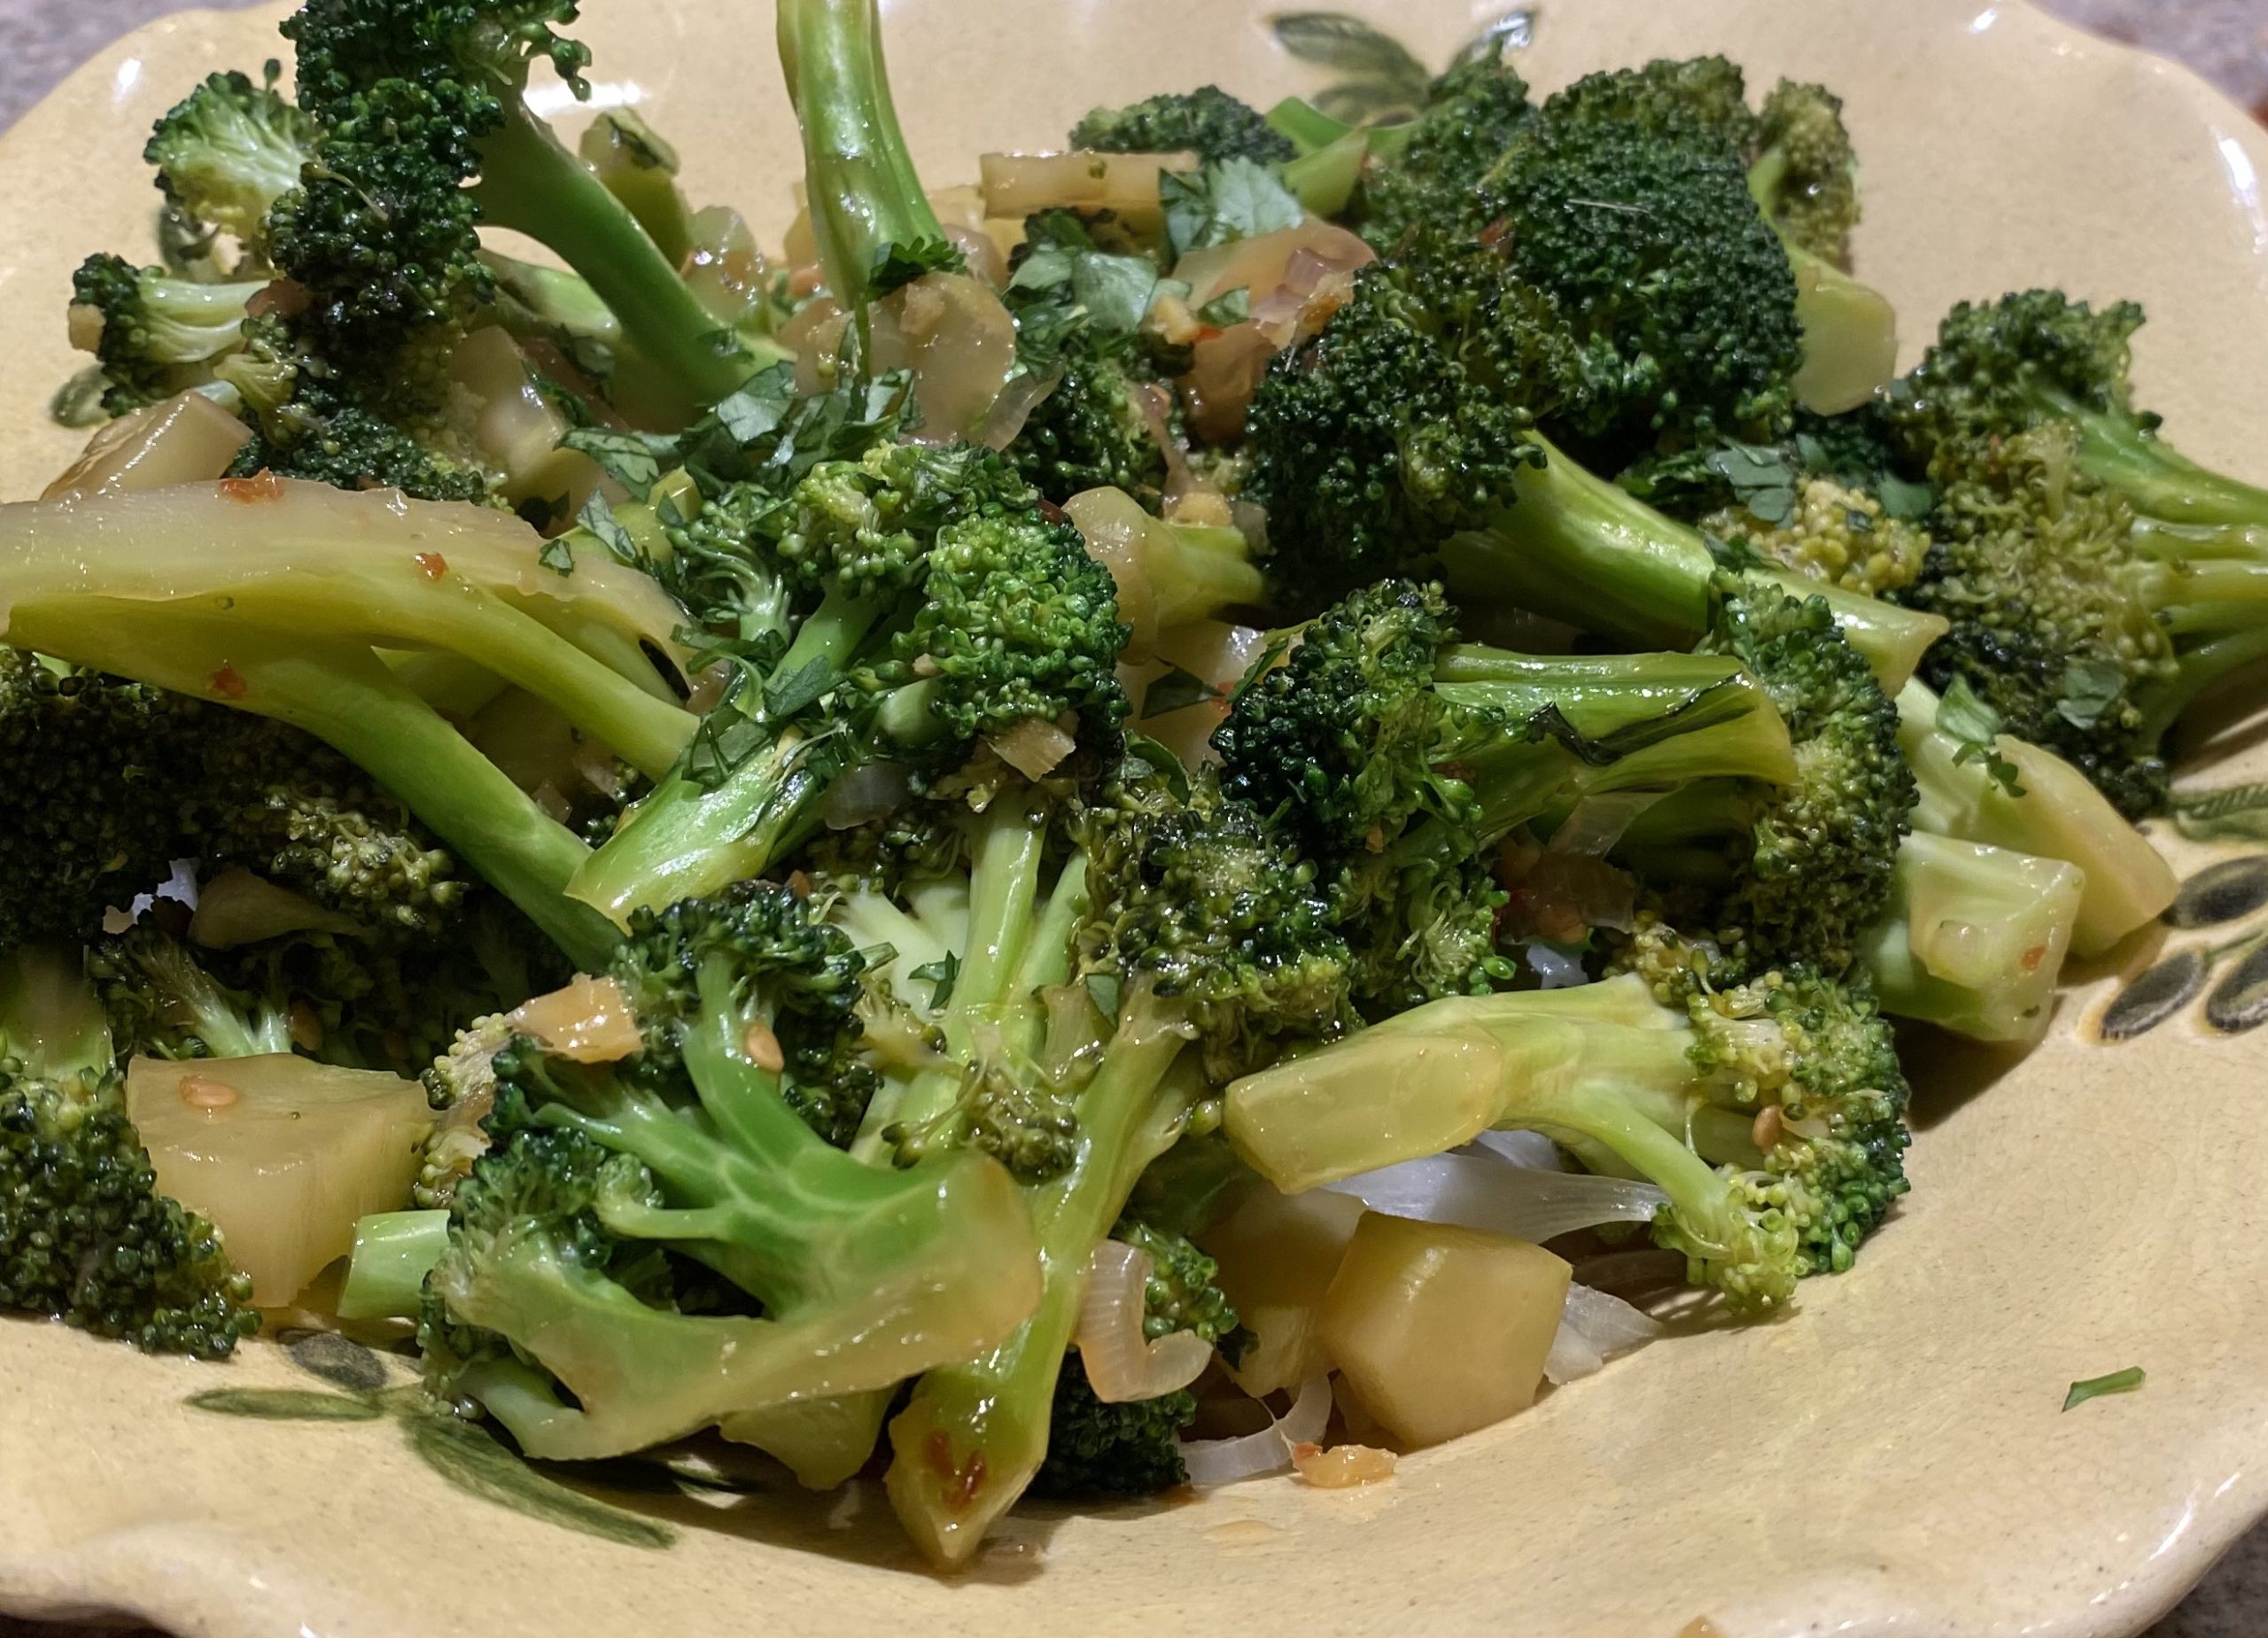 Use all the broccoli stir fry